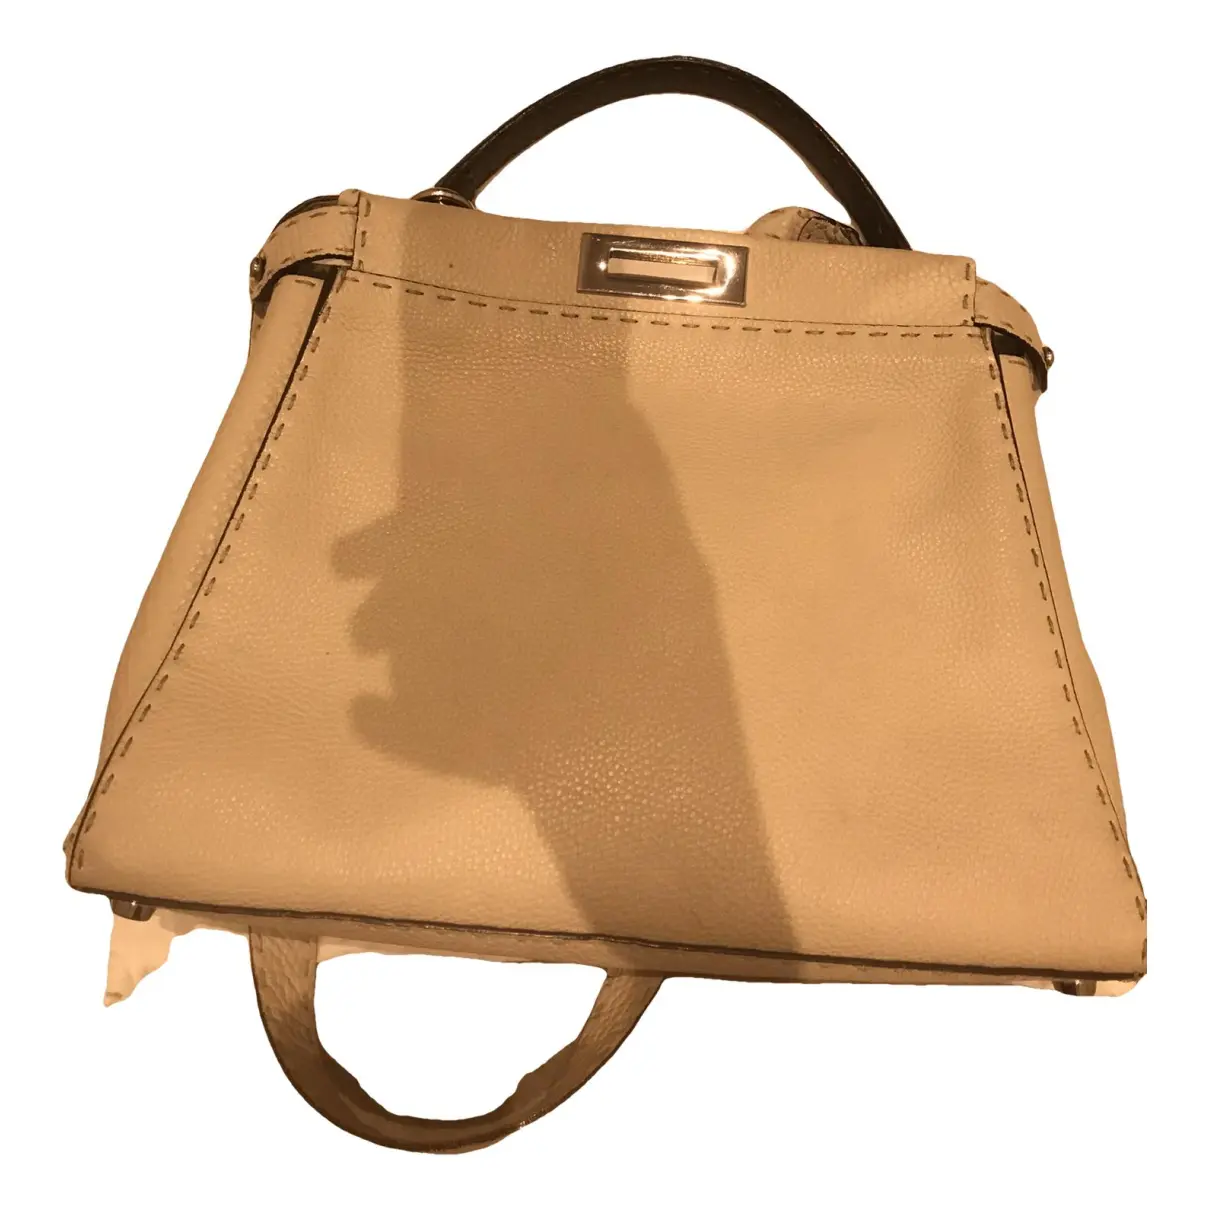 Peekaboo leather handbag